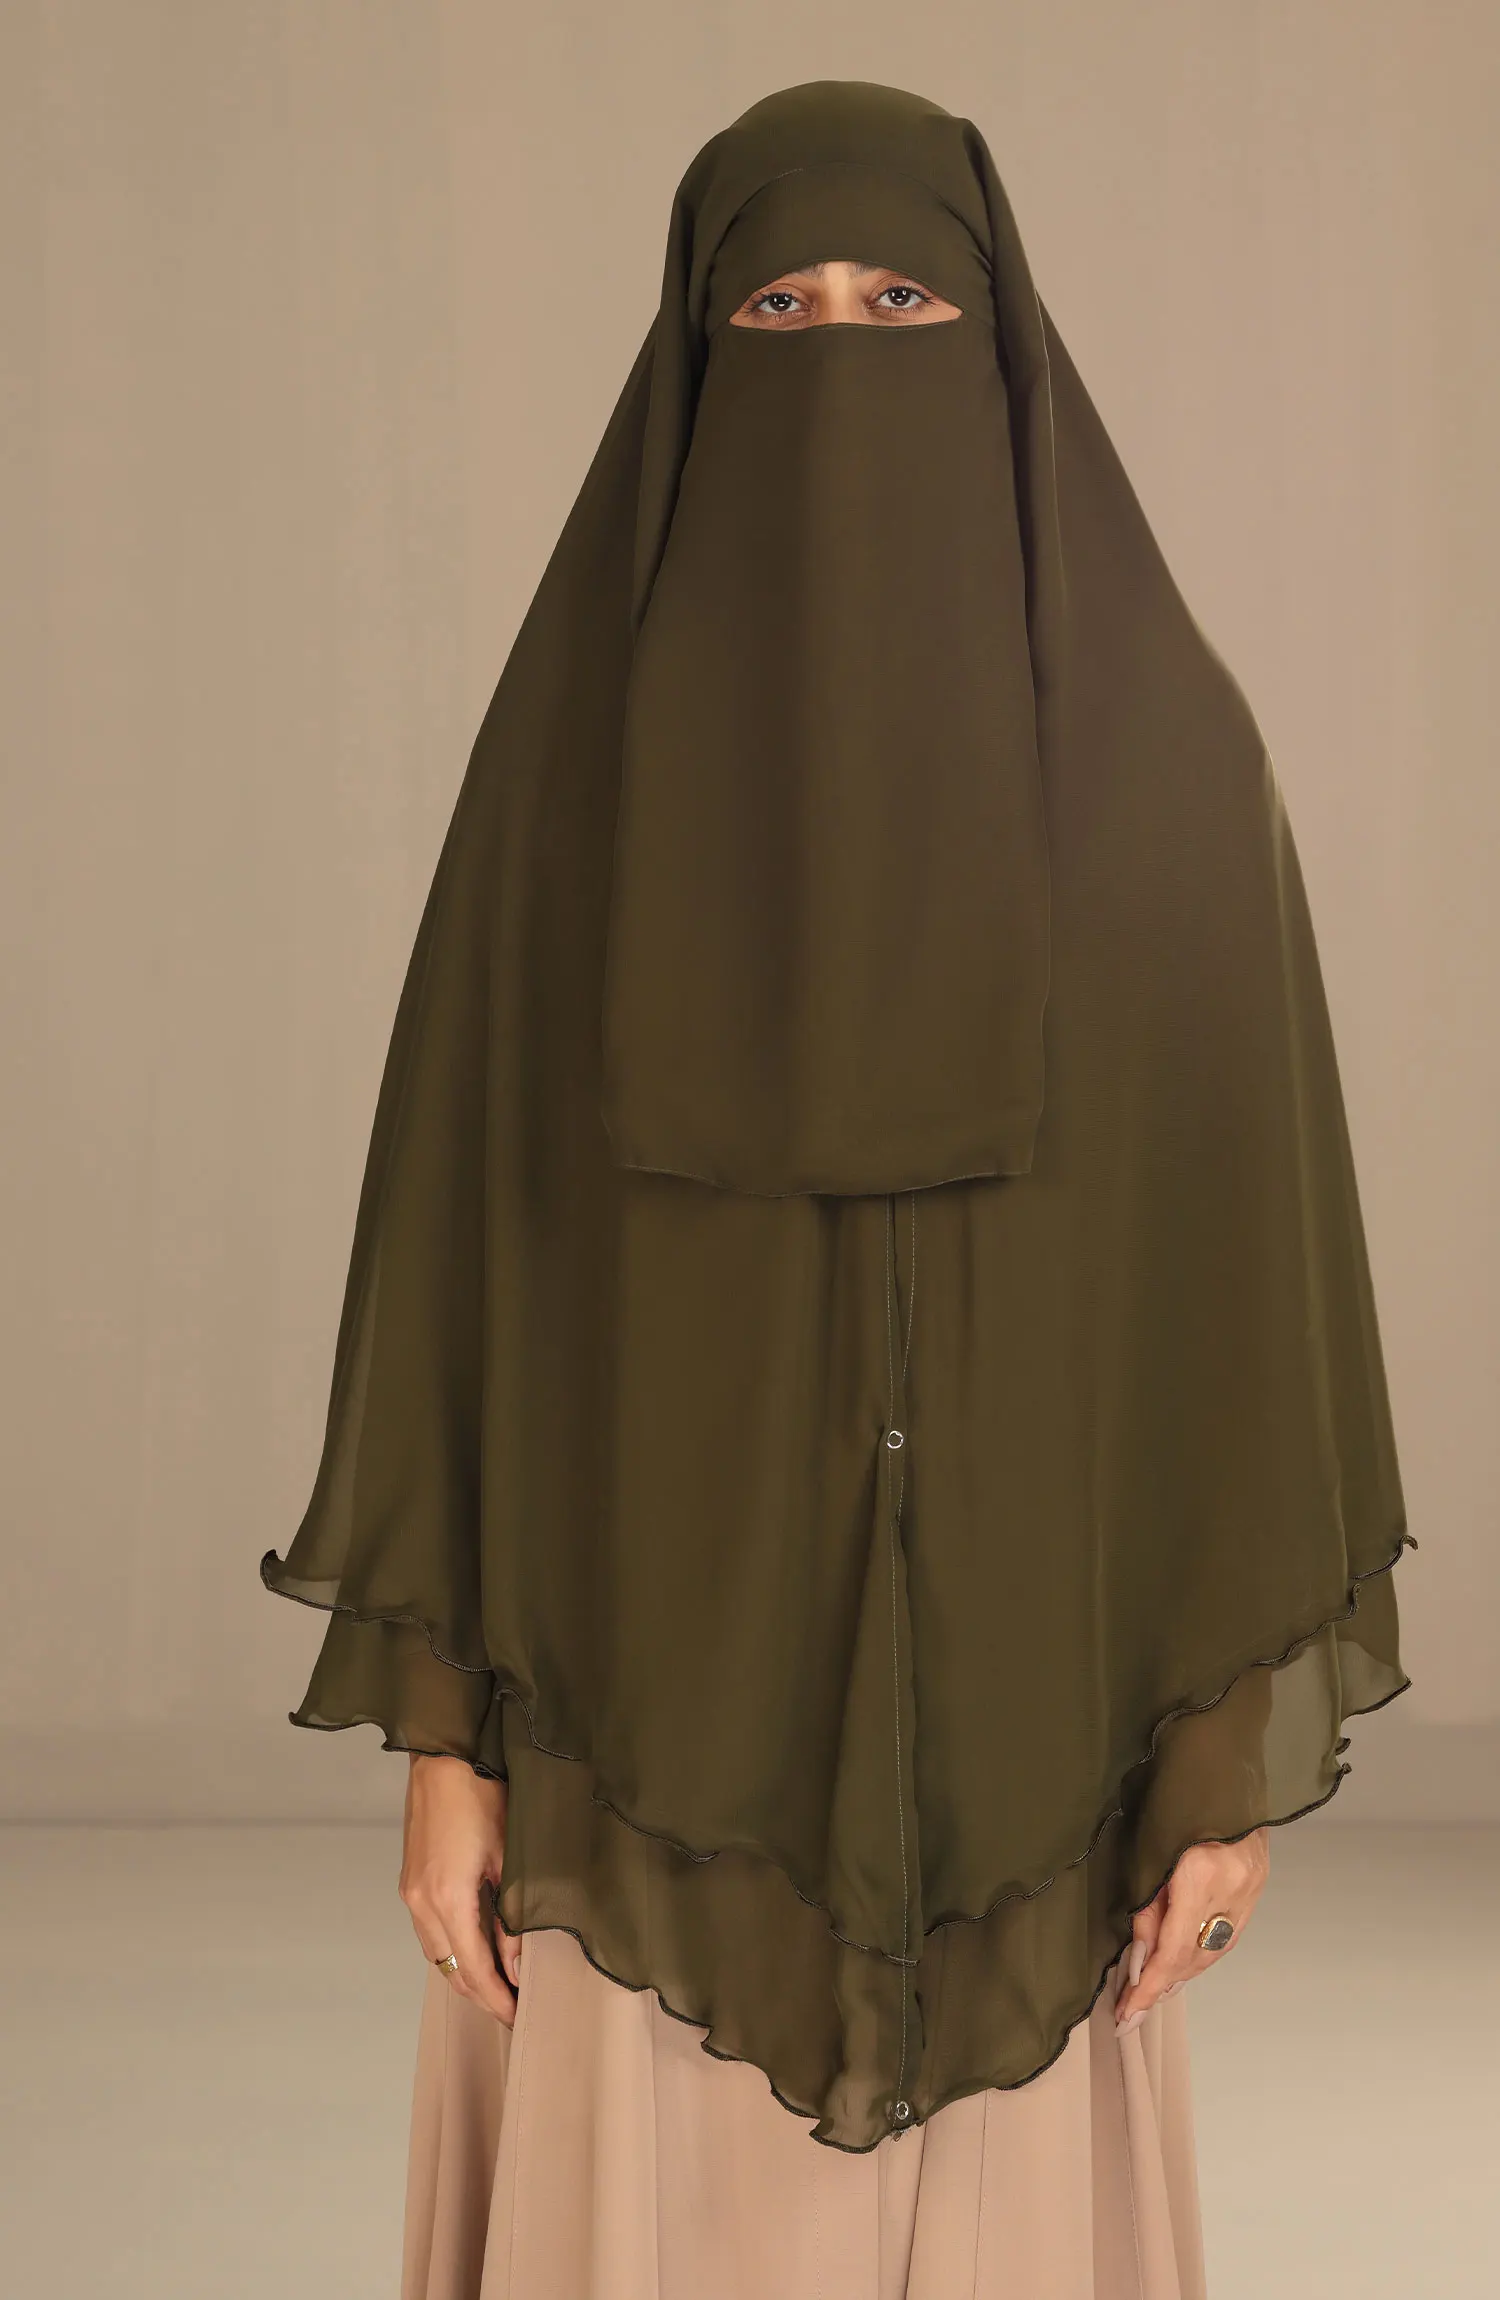 Black Camels Al-Amirah Hijab Collection - AAHC-08